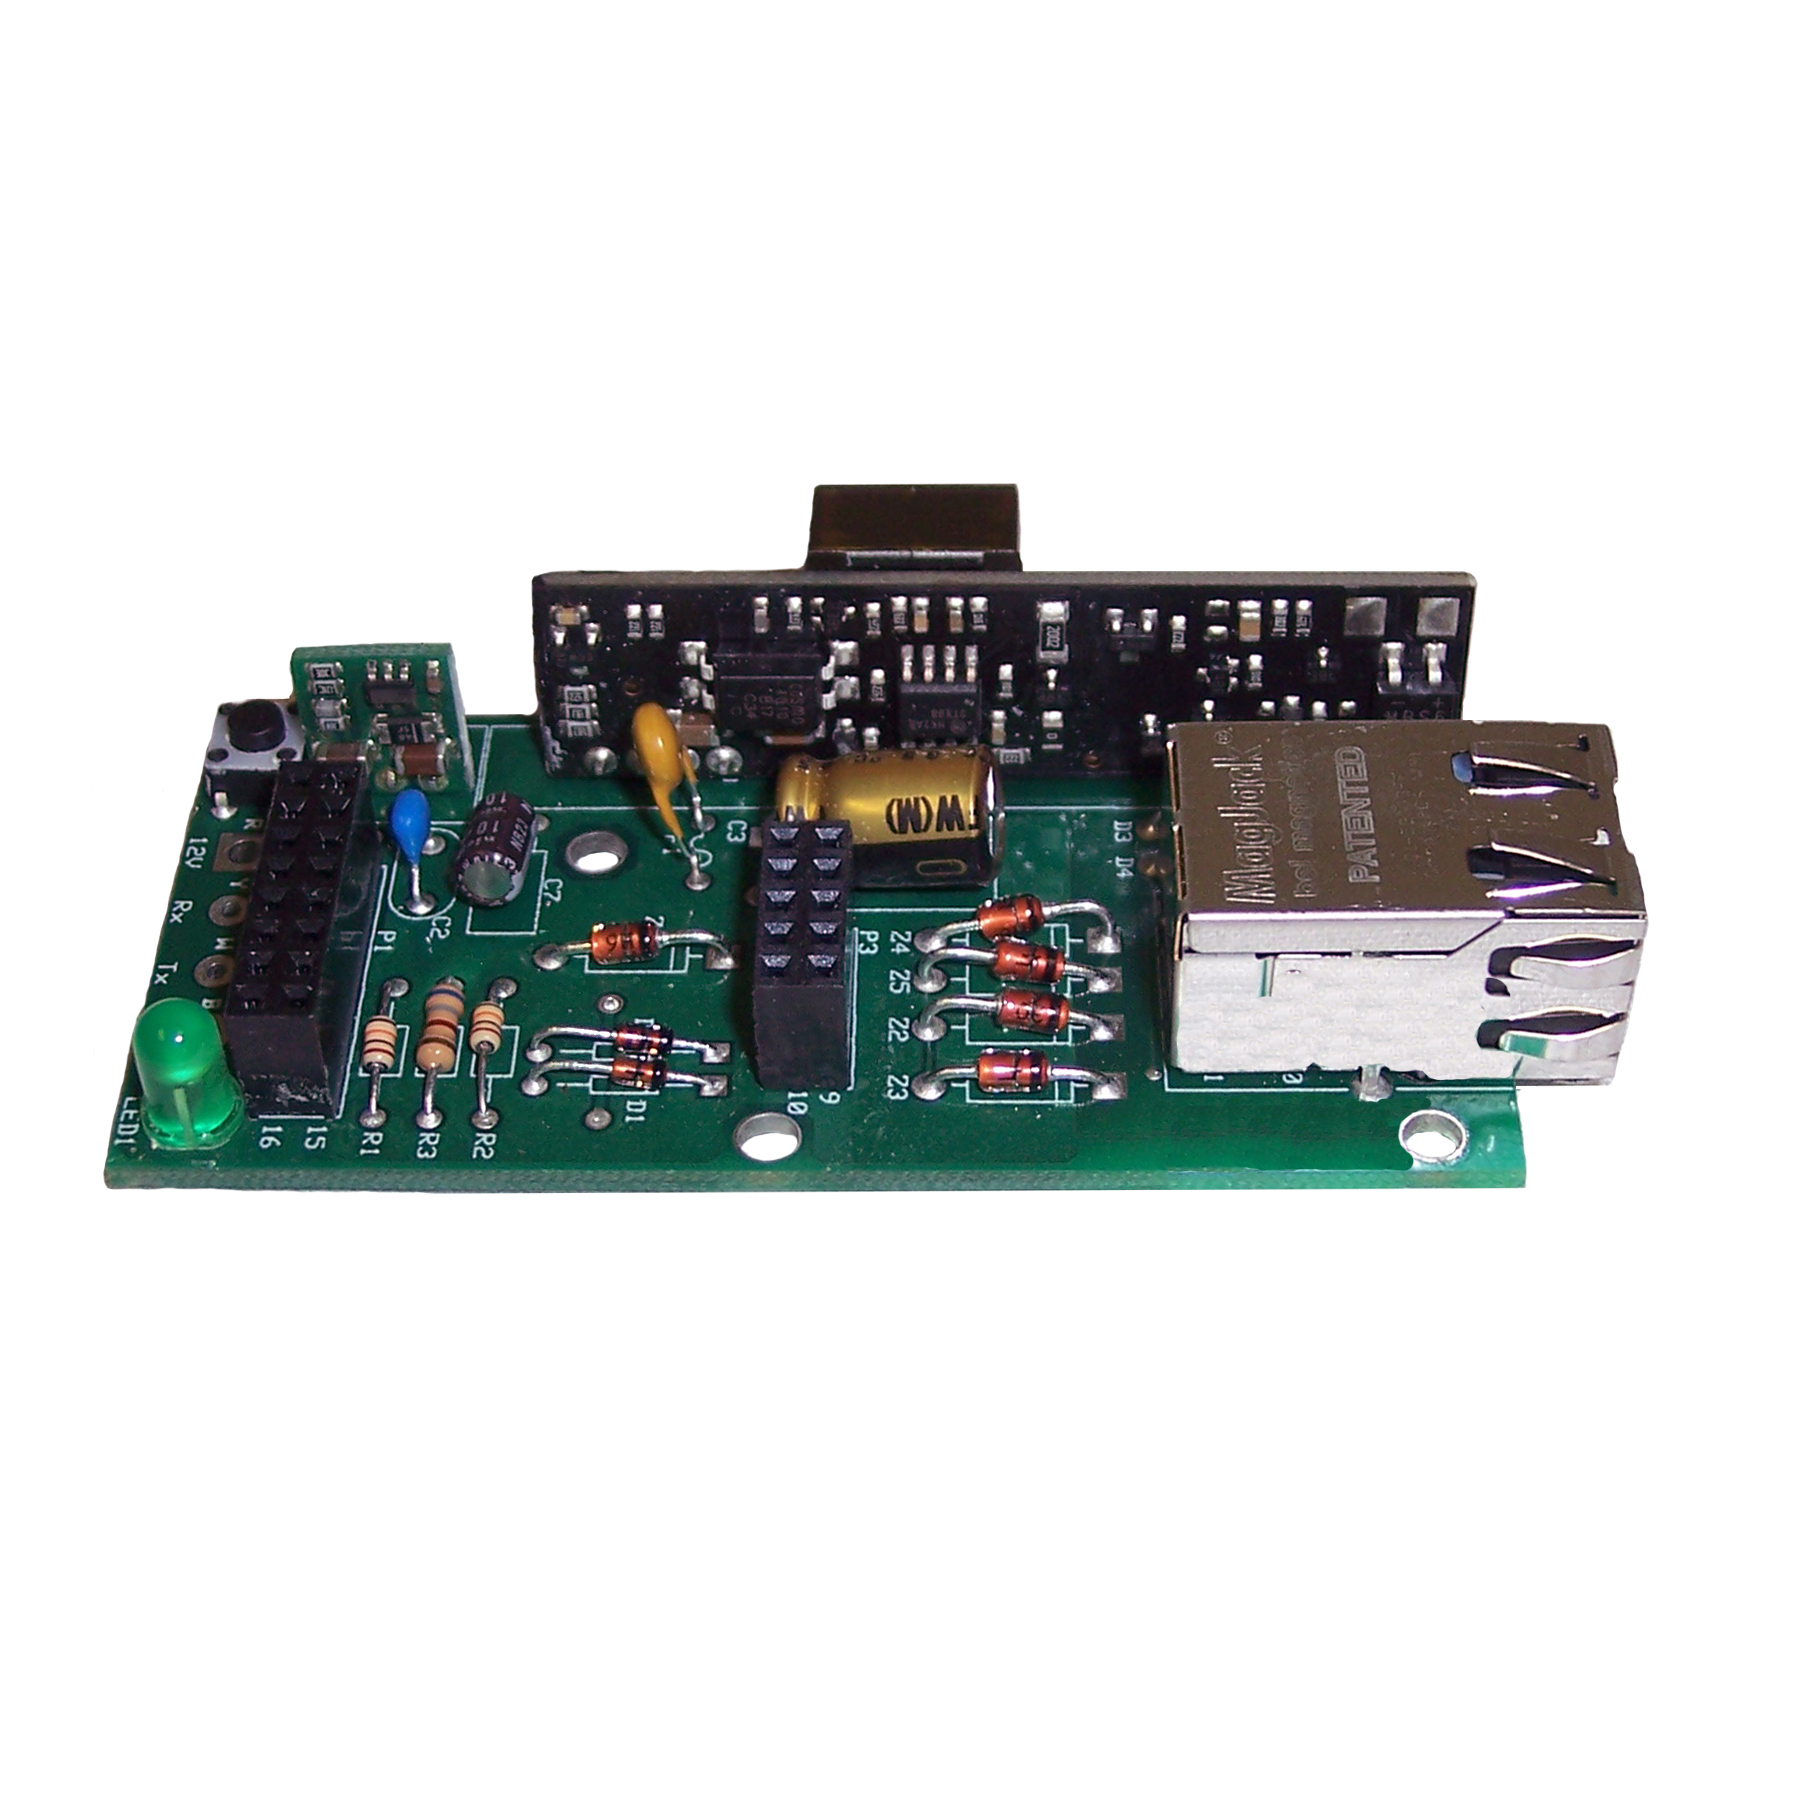 (SBL2e-200IR-PWR-DATA-SPLITTER-12) POE Power Supply and Data Connection Splitter Circuit board for Netburner SBL2e-200IR Network Card, 12VDC@1Amp Output